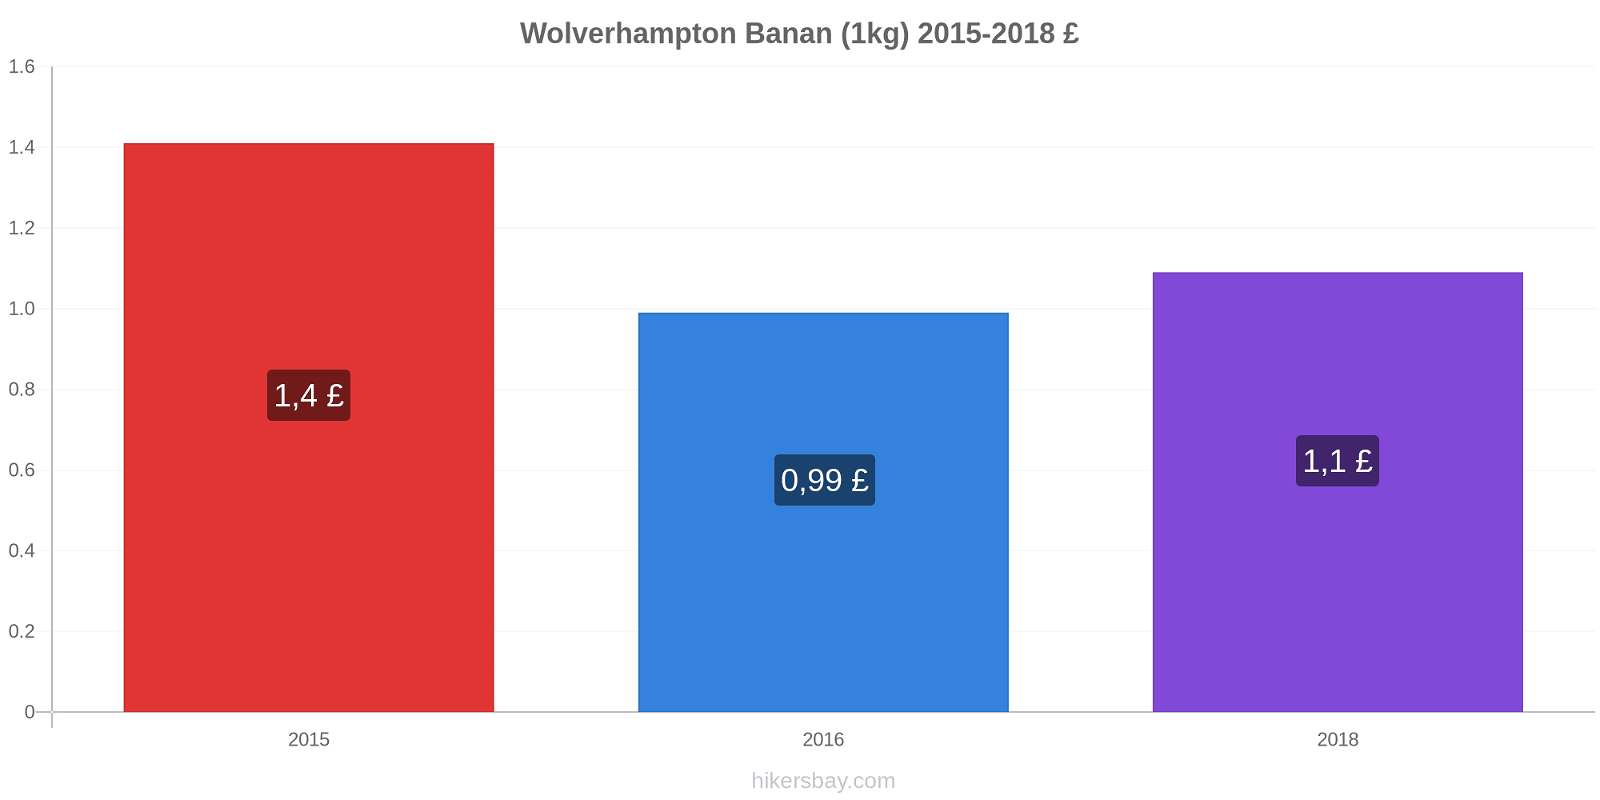 Wolverhampton prisændringer Banan (1kg) hikersbay.com